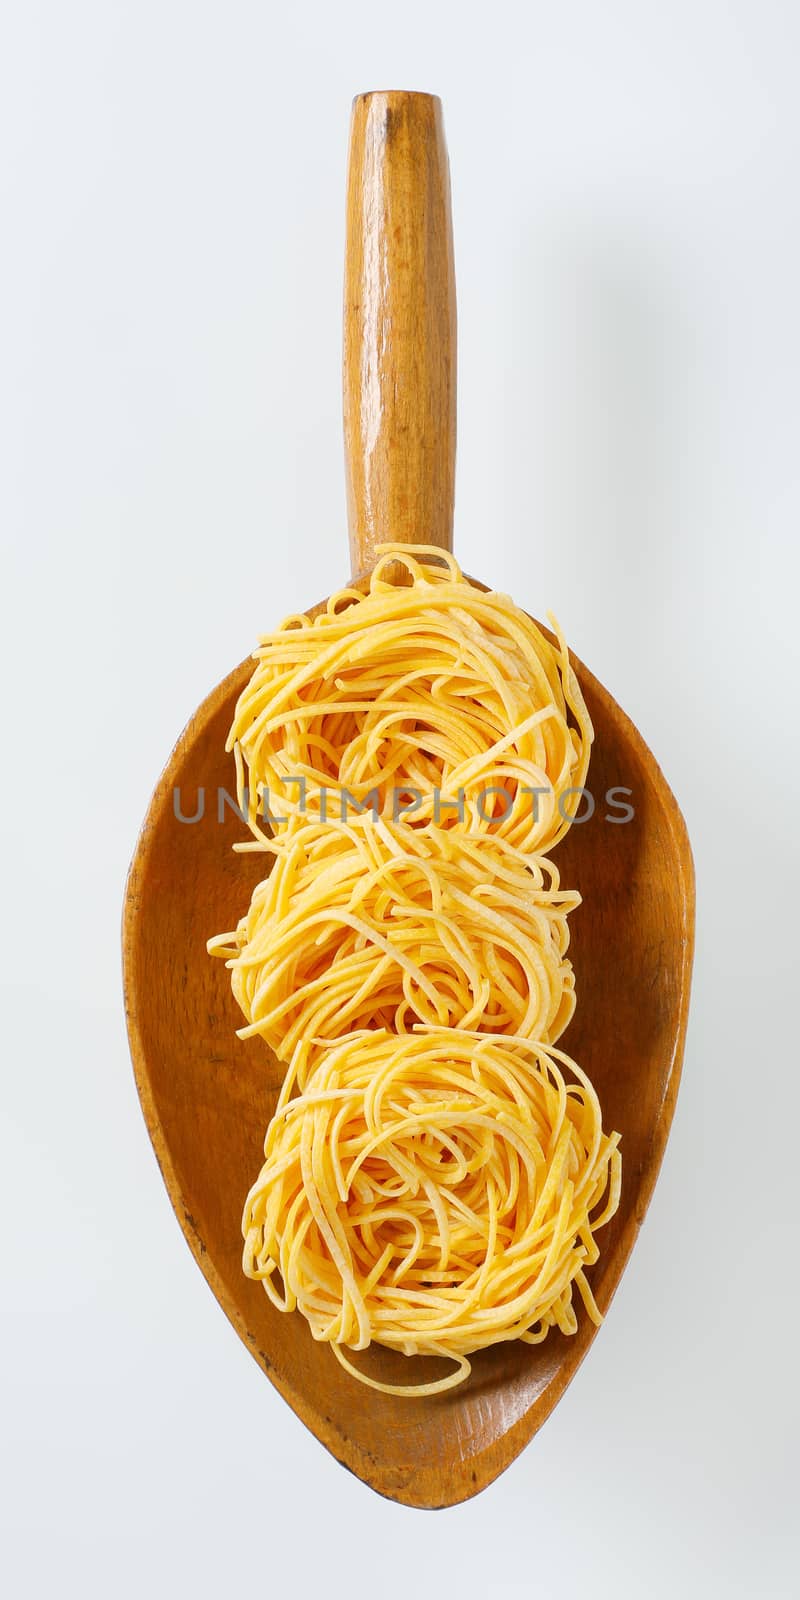 bundles of spaghetti pasta in wooden scoop